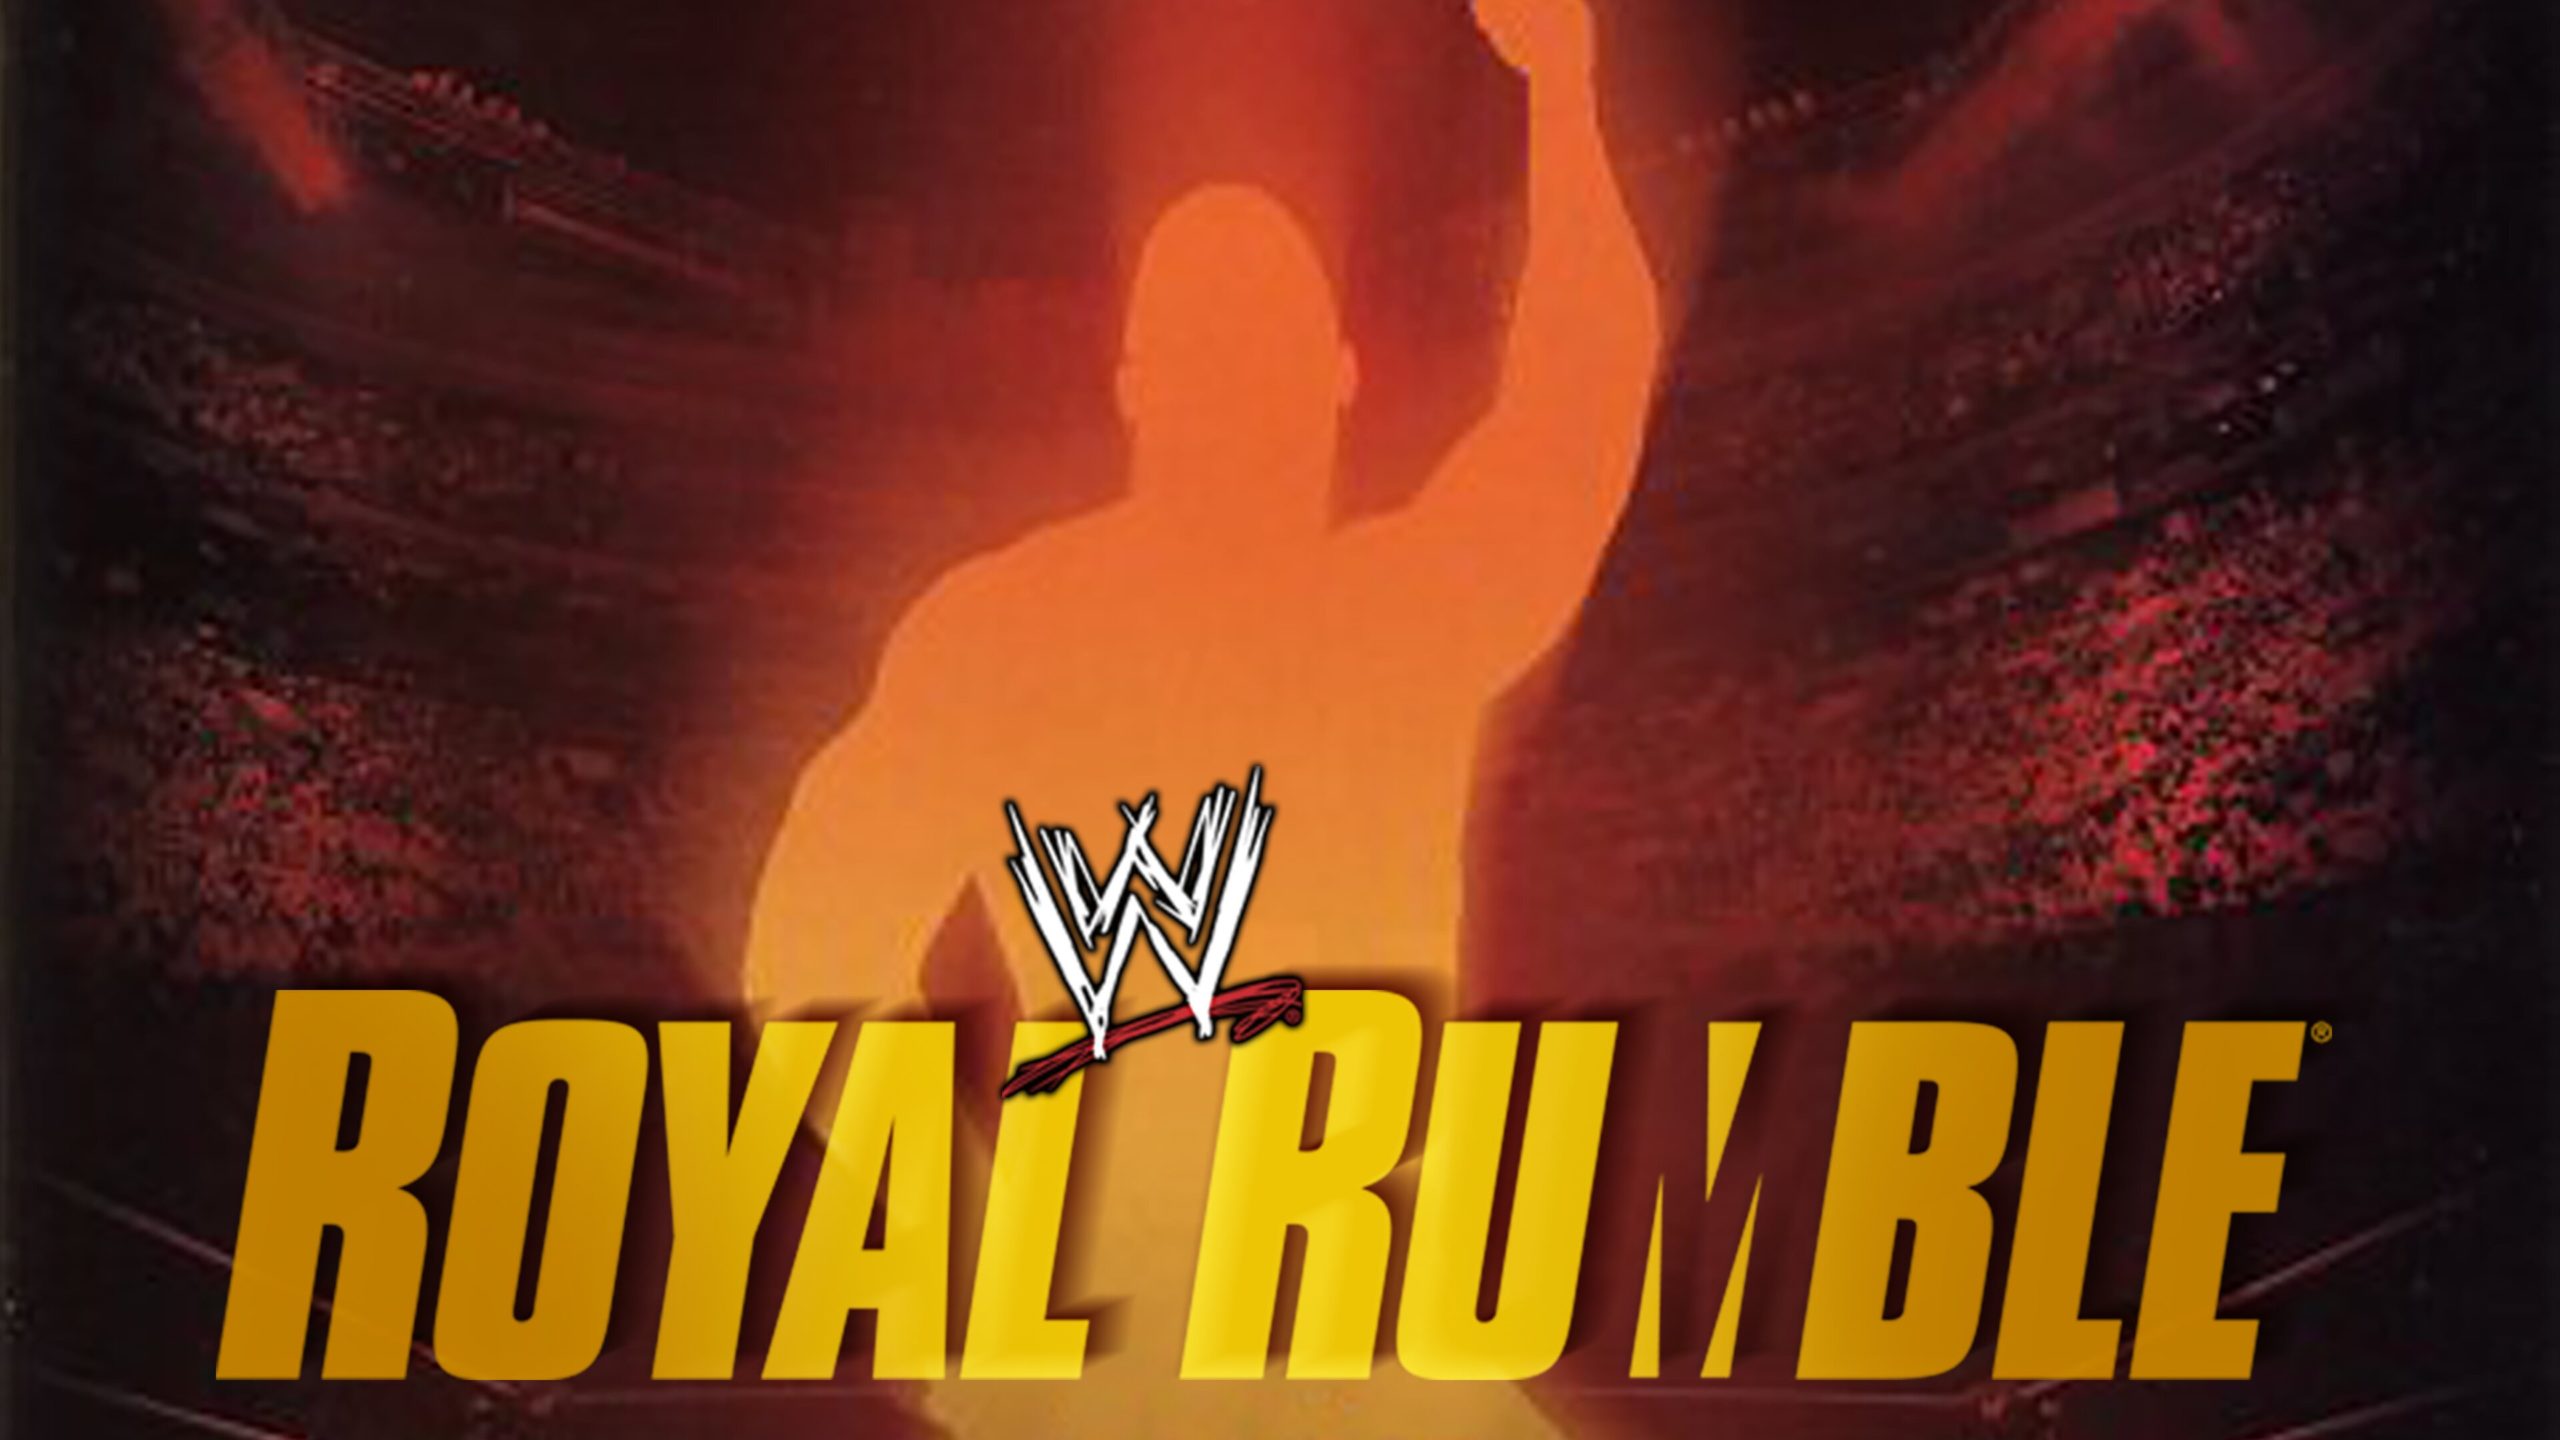 wwe royal rumble 2002 logo